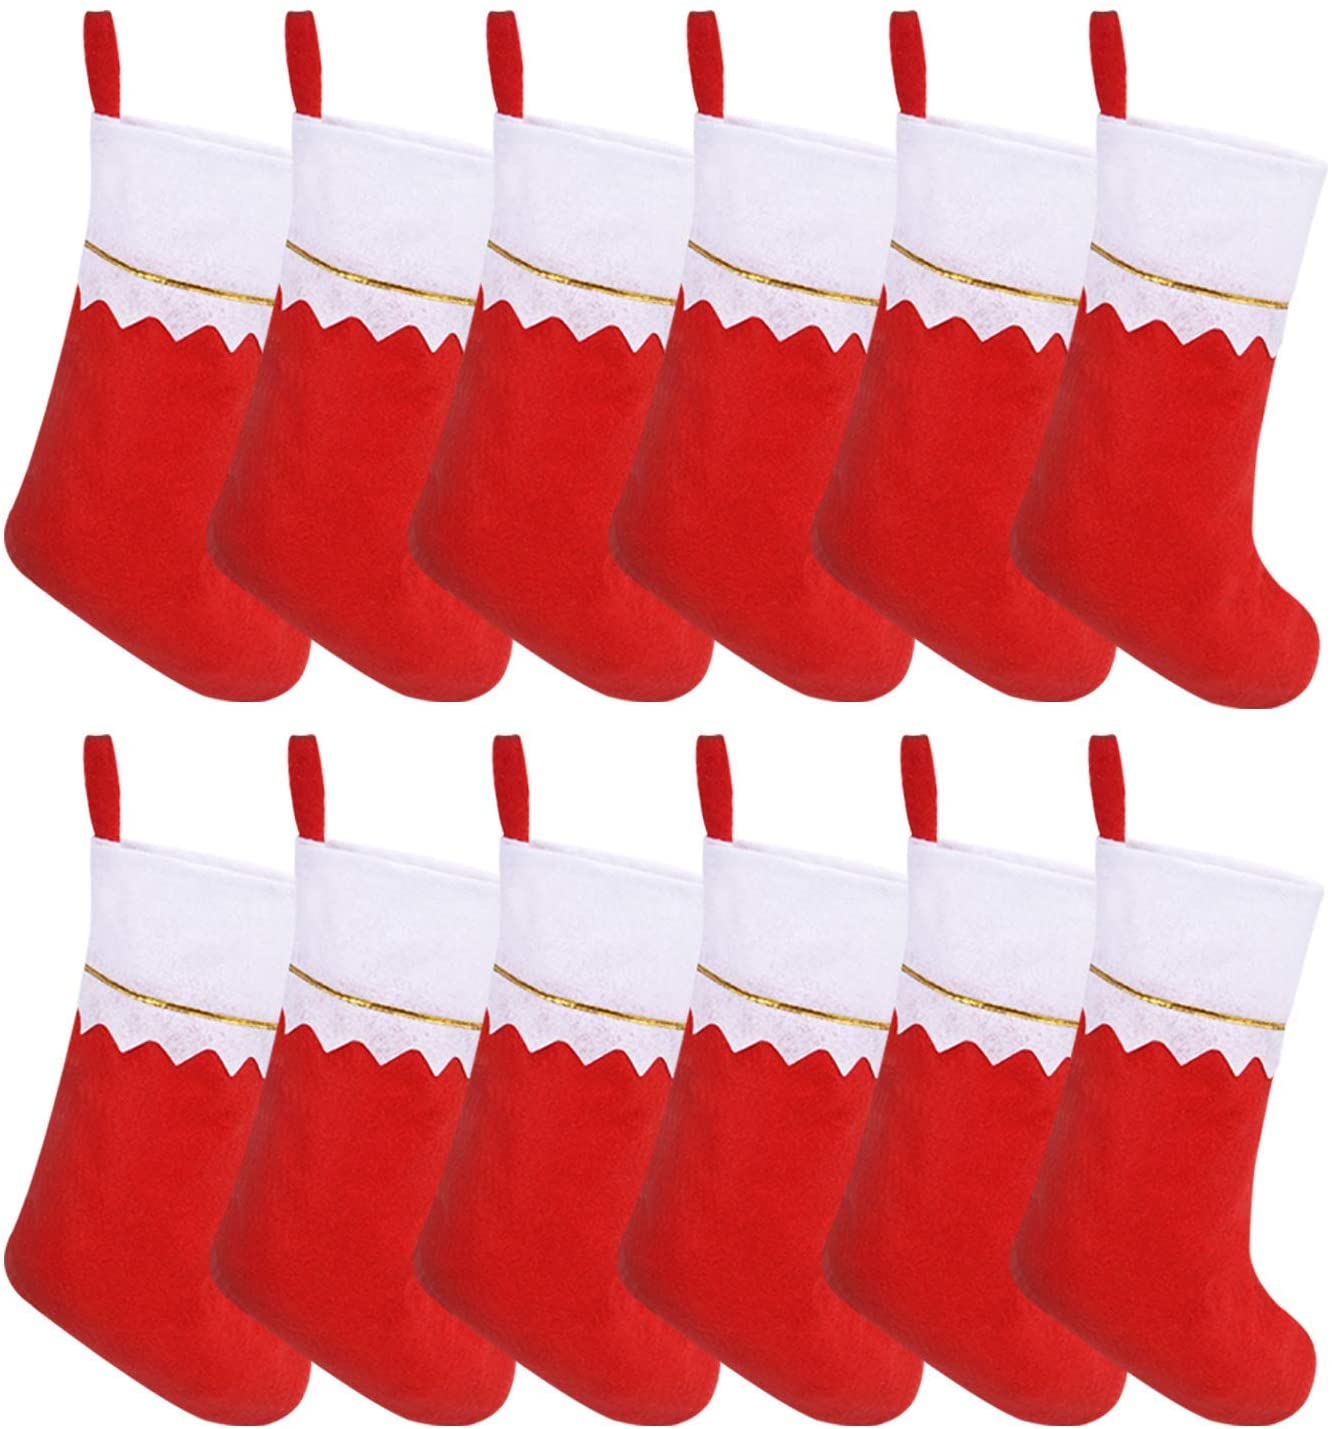 4" x 3 3/4" Mini Christmas Stocking 12 pcs Red Felt Christmas Stockings 